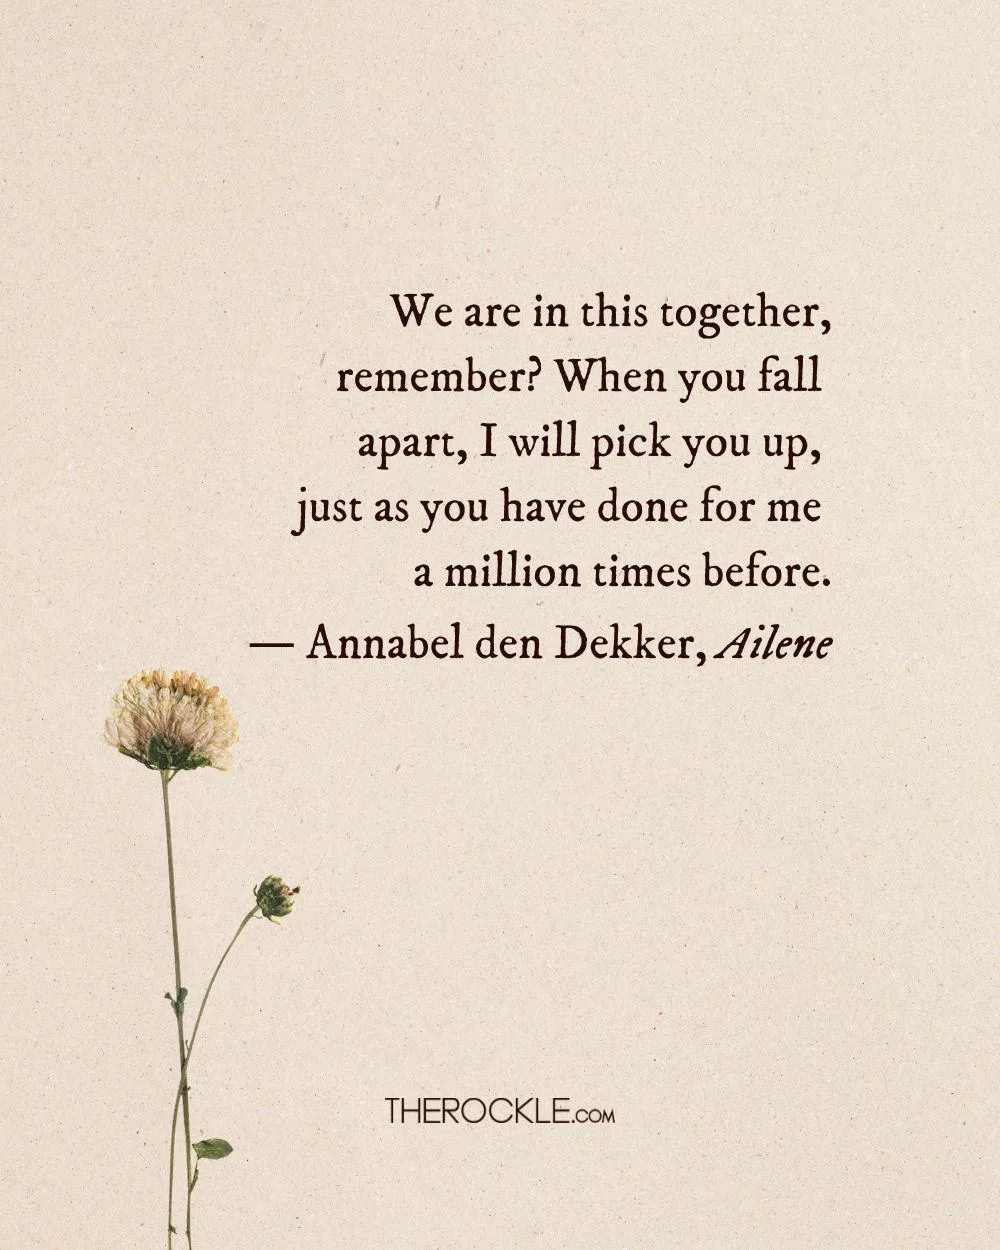 Annabel den Dekker on friendship and support